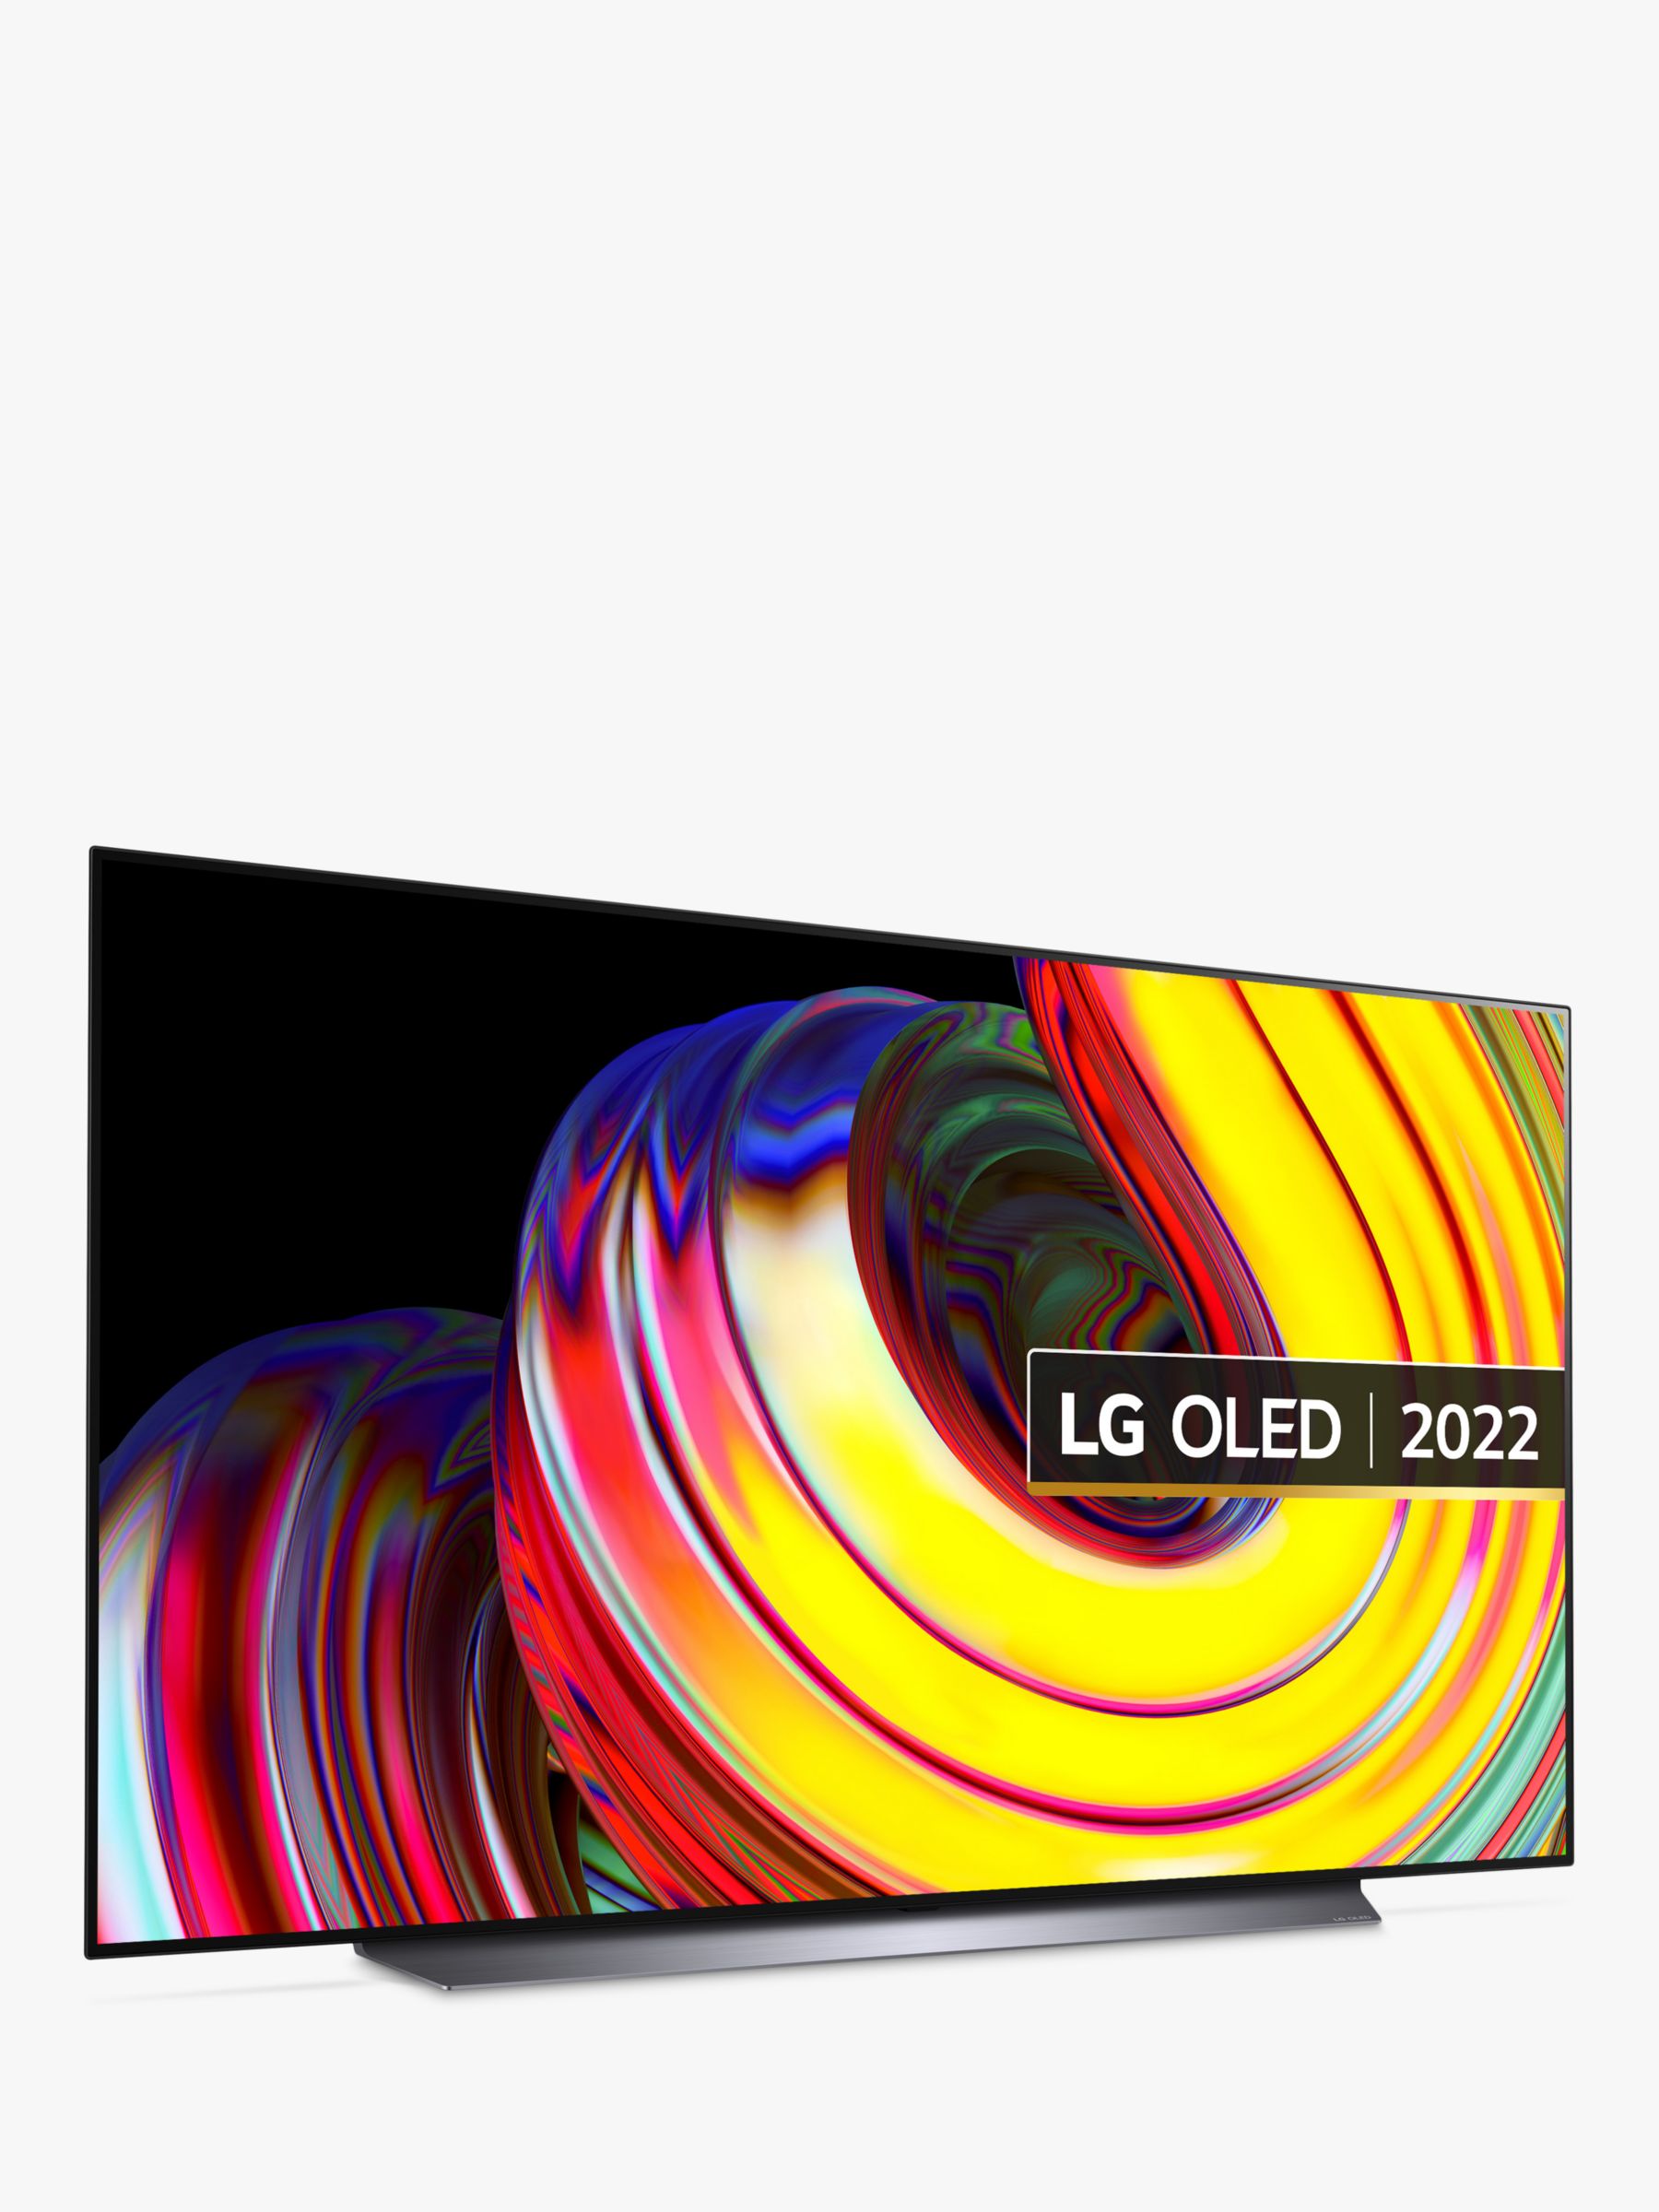 Gamme TV LG OLED CS, 4K 120 FPS, HDR, HDMI 2.1, Dolby Atmos